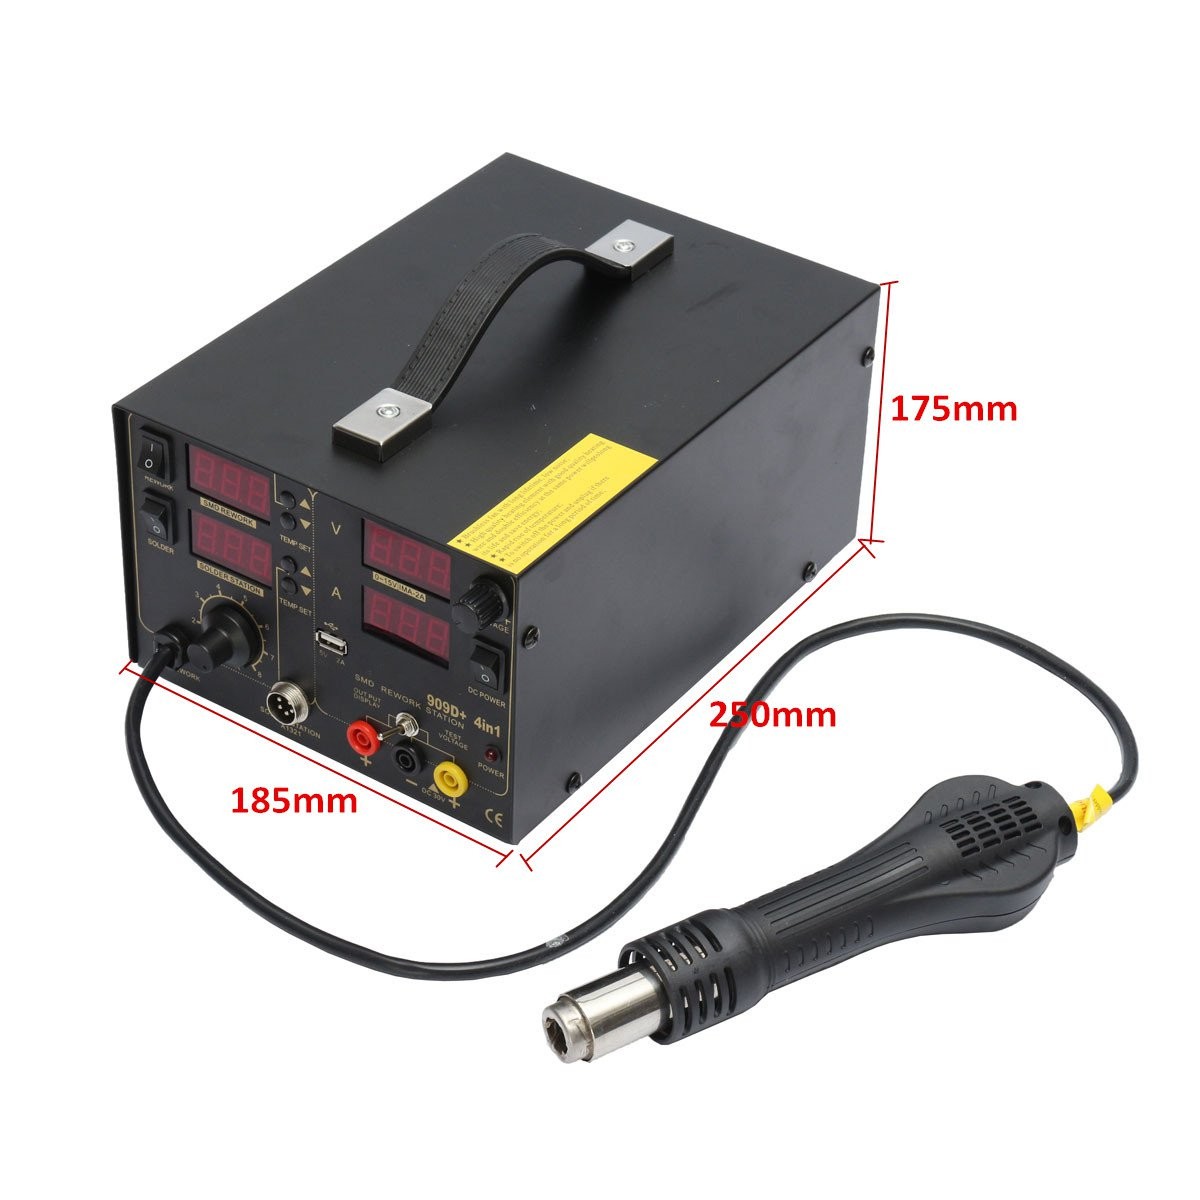 Saike-110V-AC-909D-Rework-Soldering-Station-Hot-Heat-Air-Nozzle-DC-USB-Power-Supply-US-Plug-1090753-4